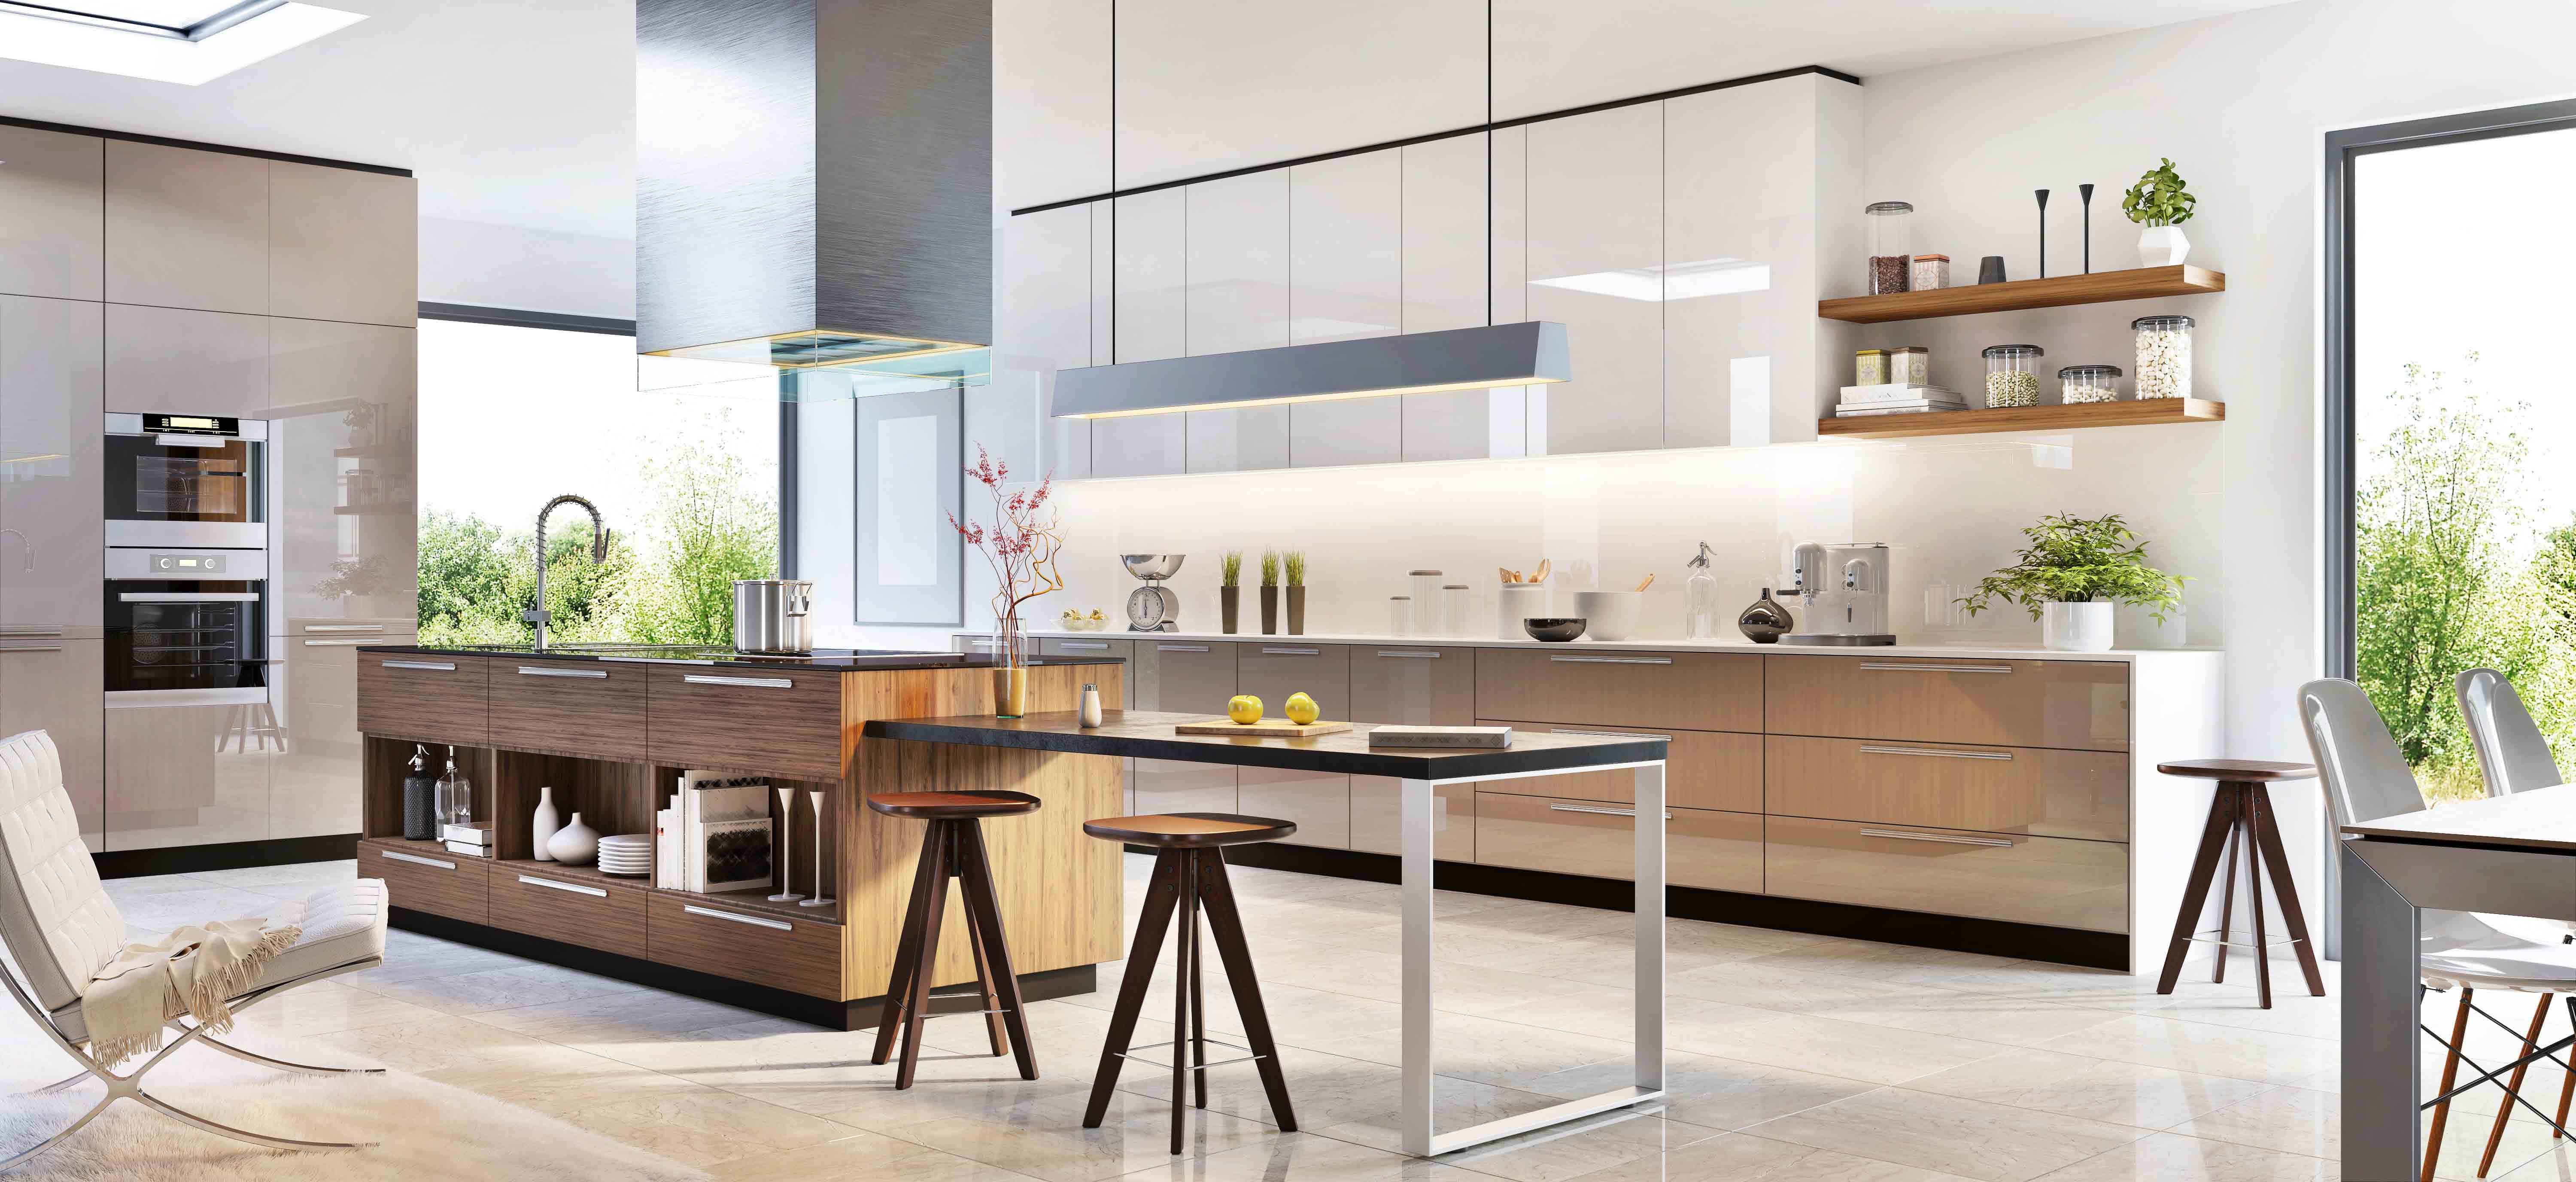 make a style statement with these kitchen interior design ideas